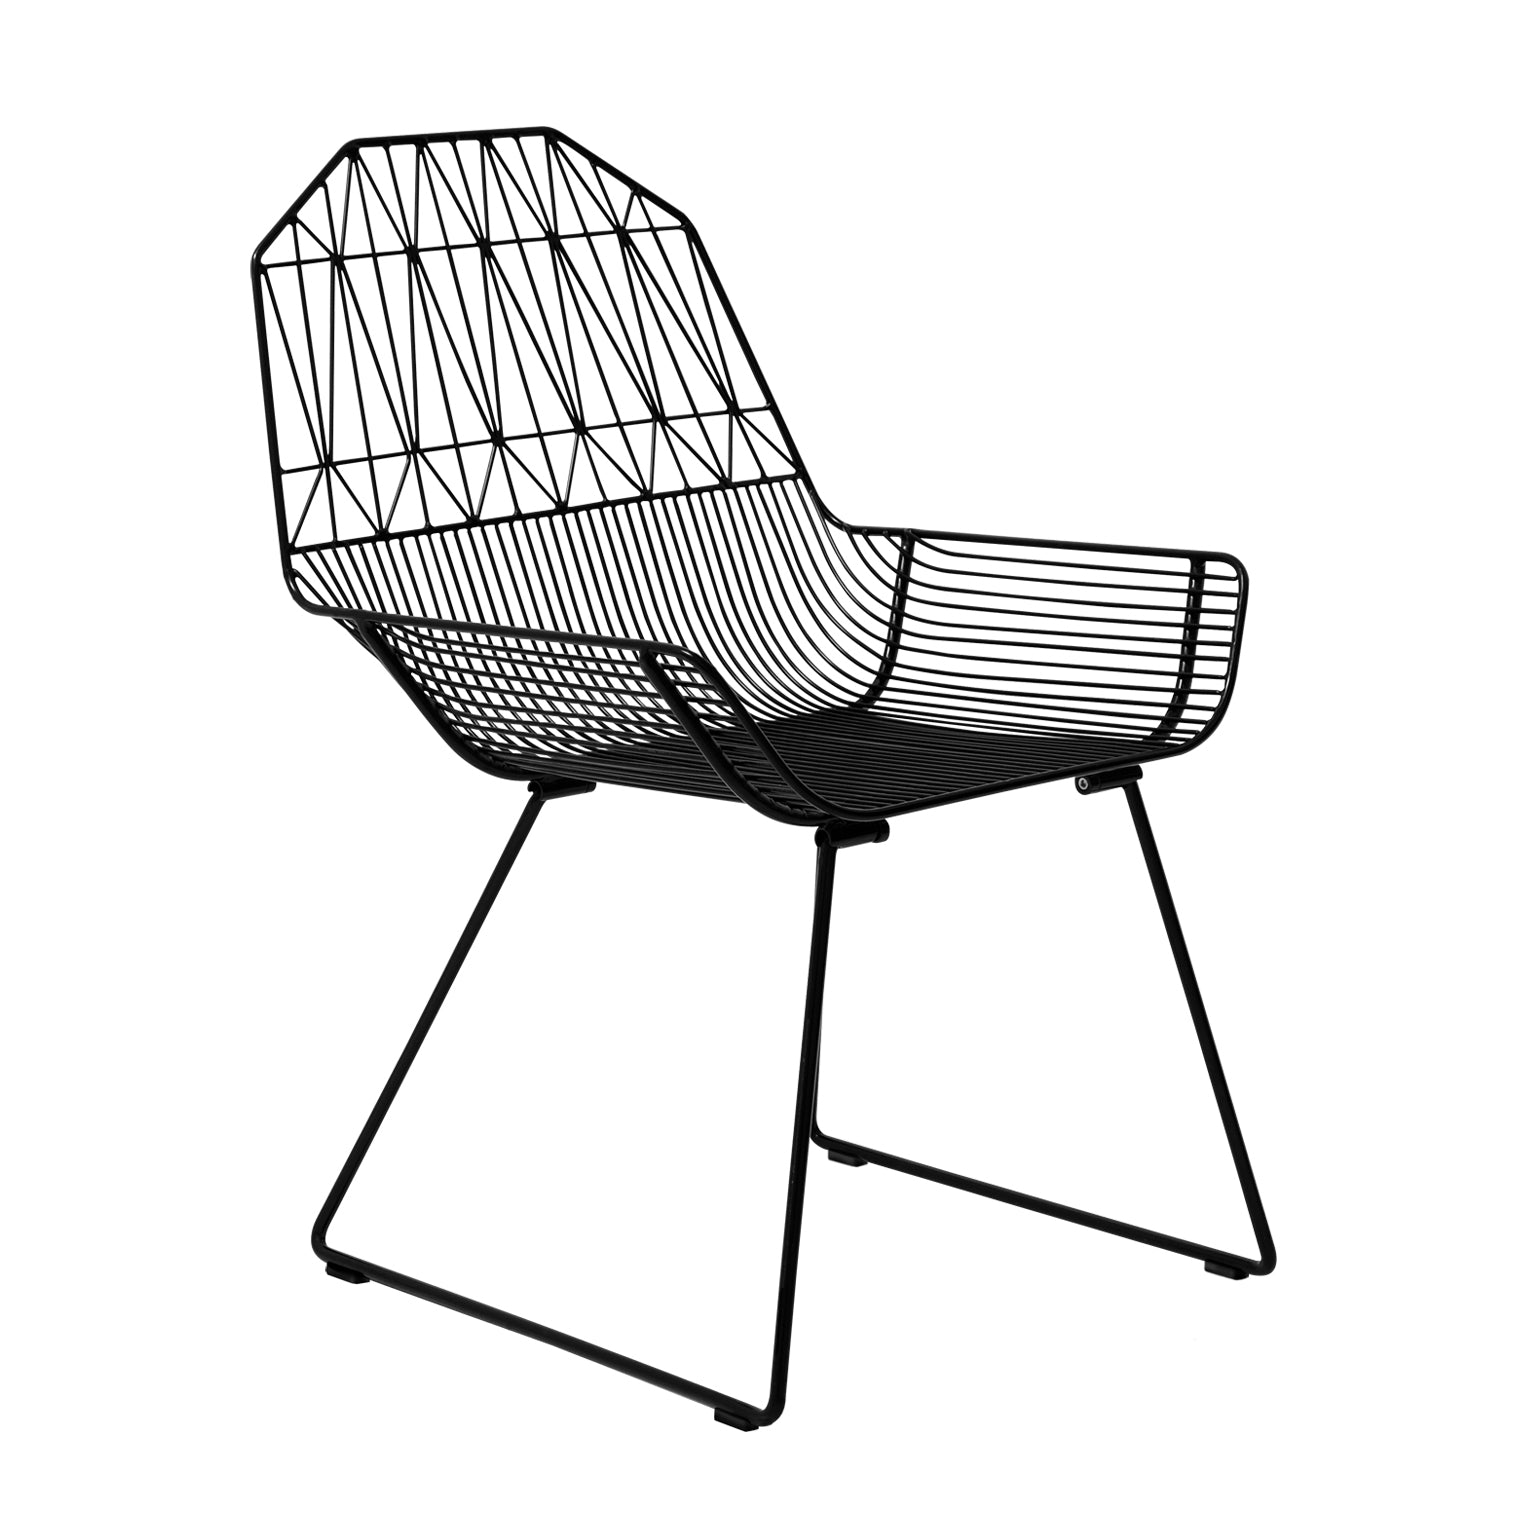 The Farmhouse Chair - Set of 2 - Black / No Seat Pad